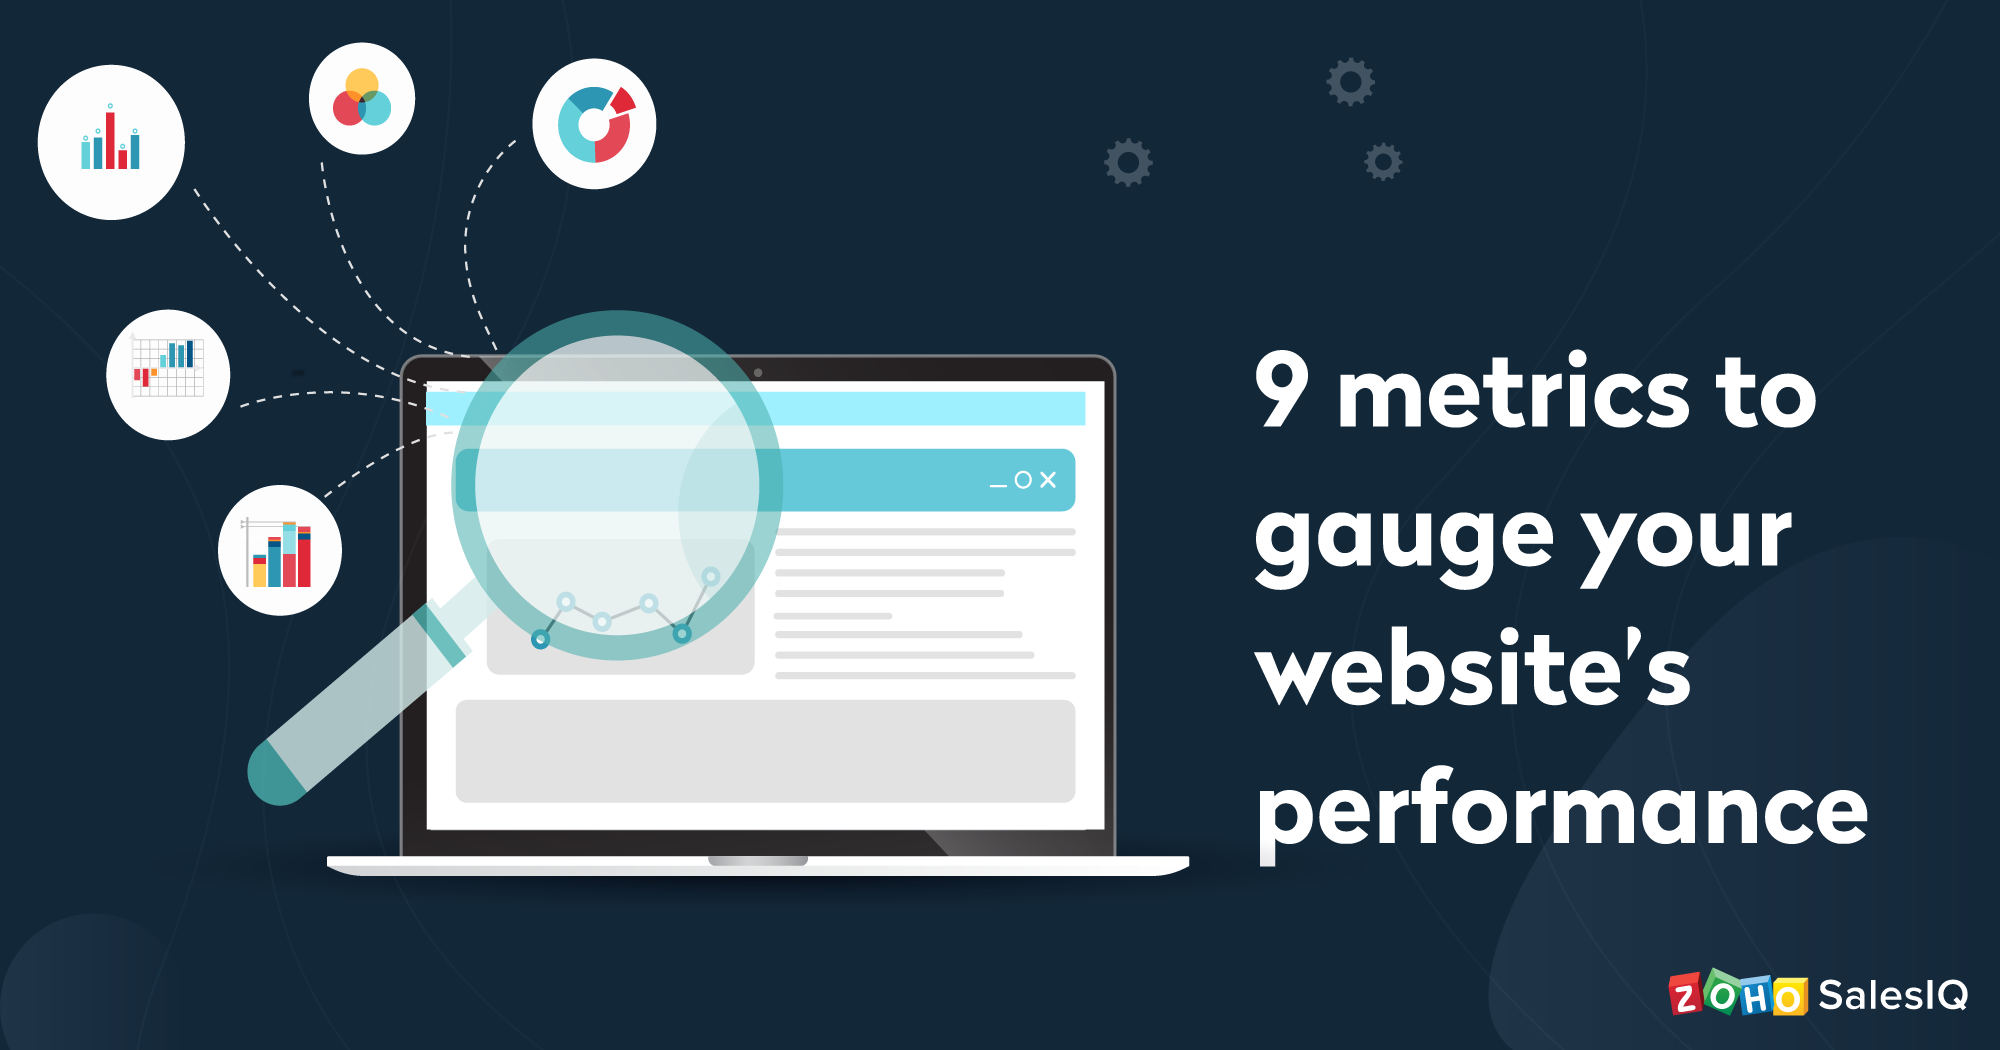 9 fundamental website metrics to gauge your website's performance